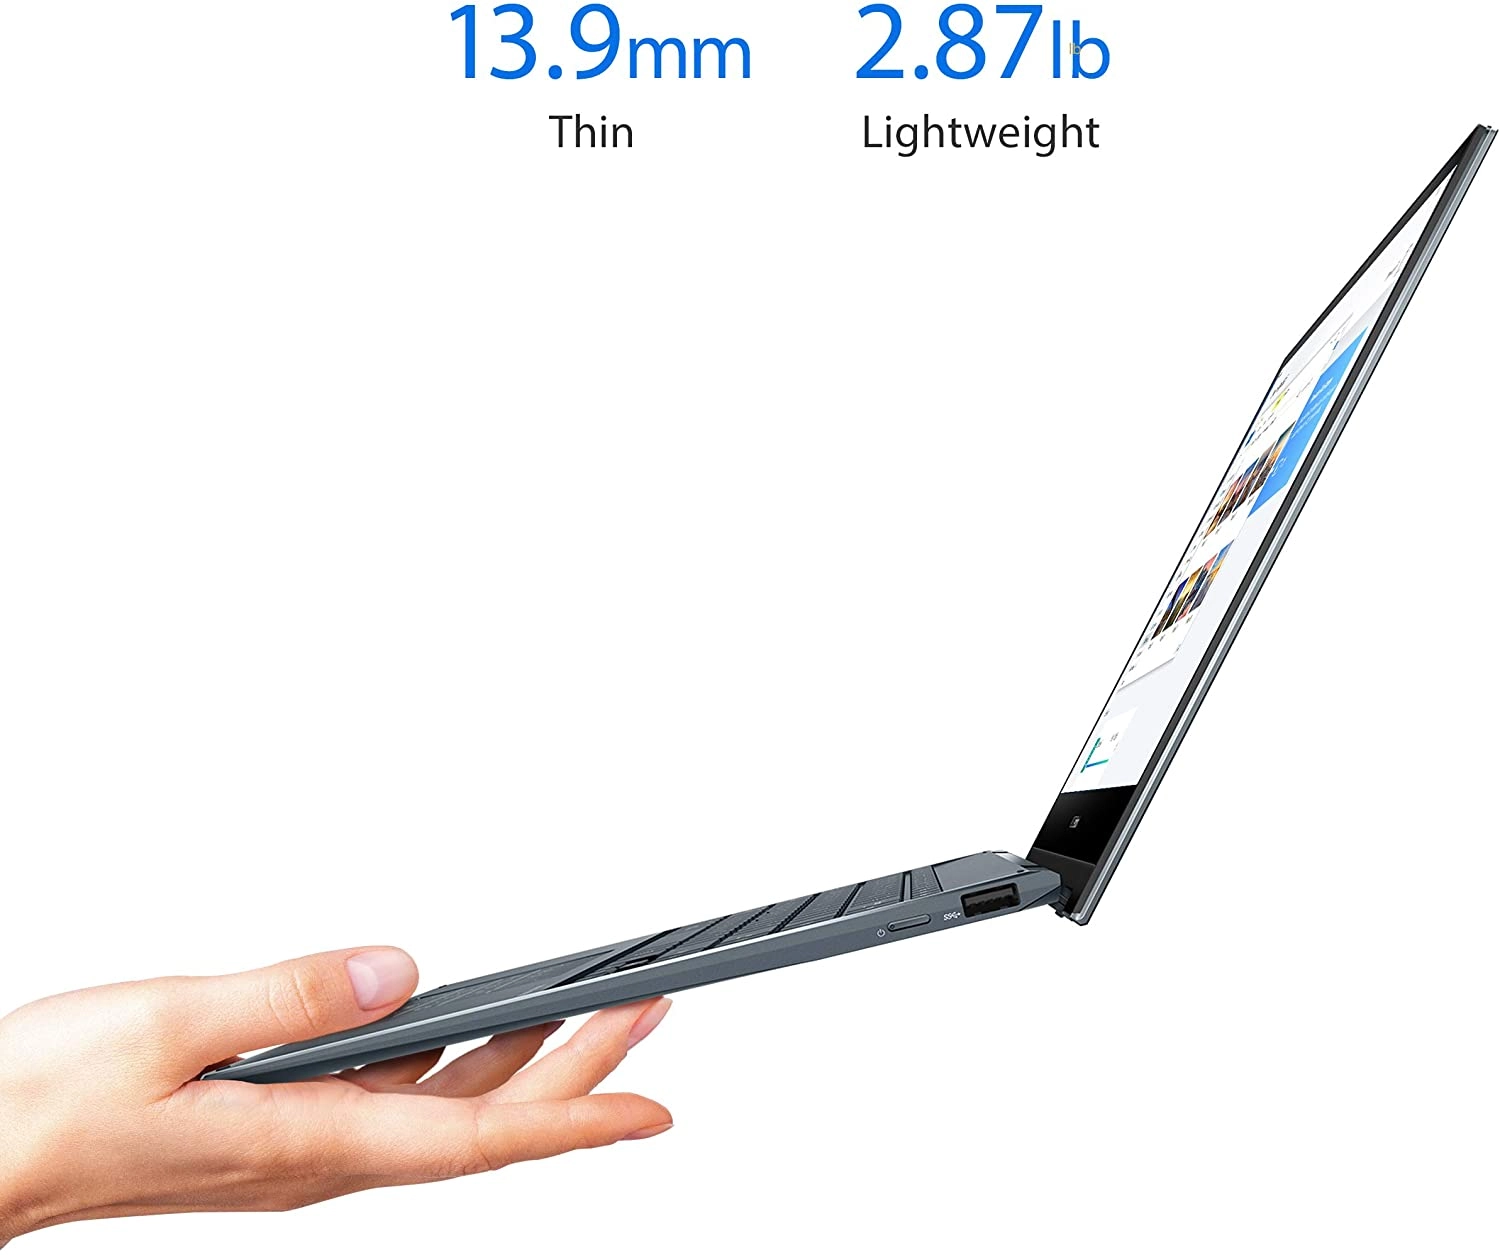 Asus ZenBook Flip 13 OLED laptop image